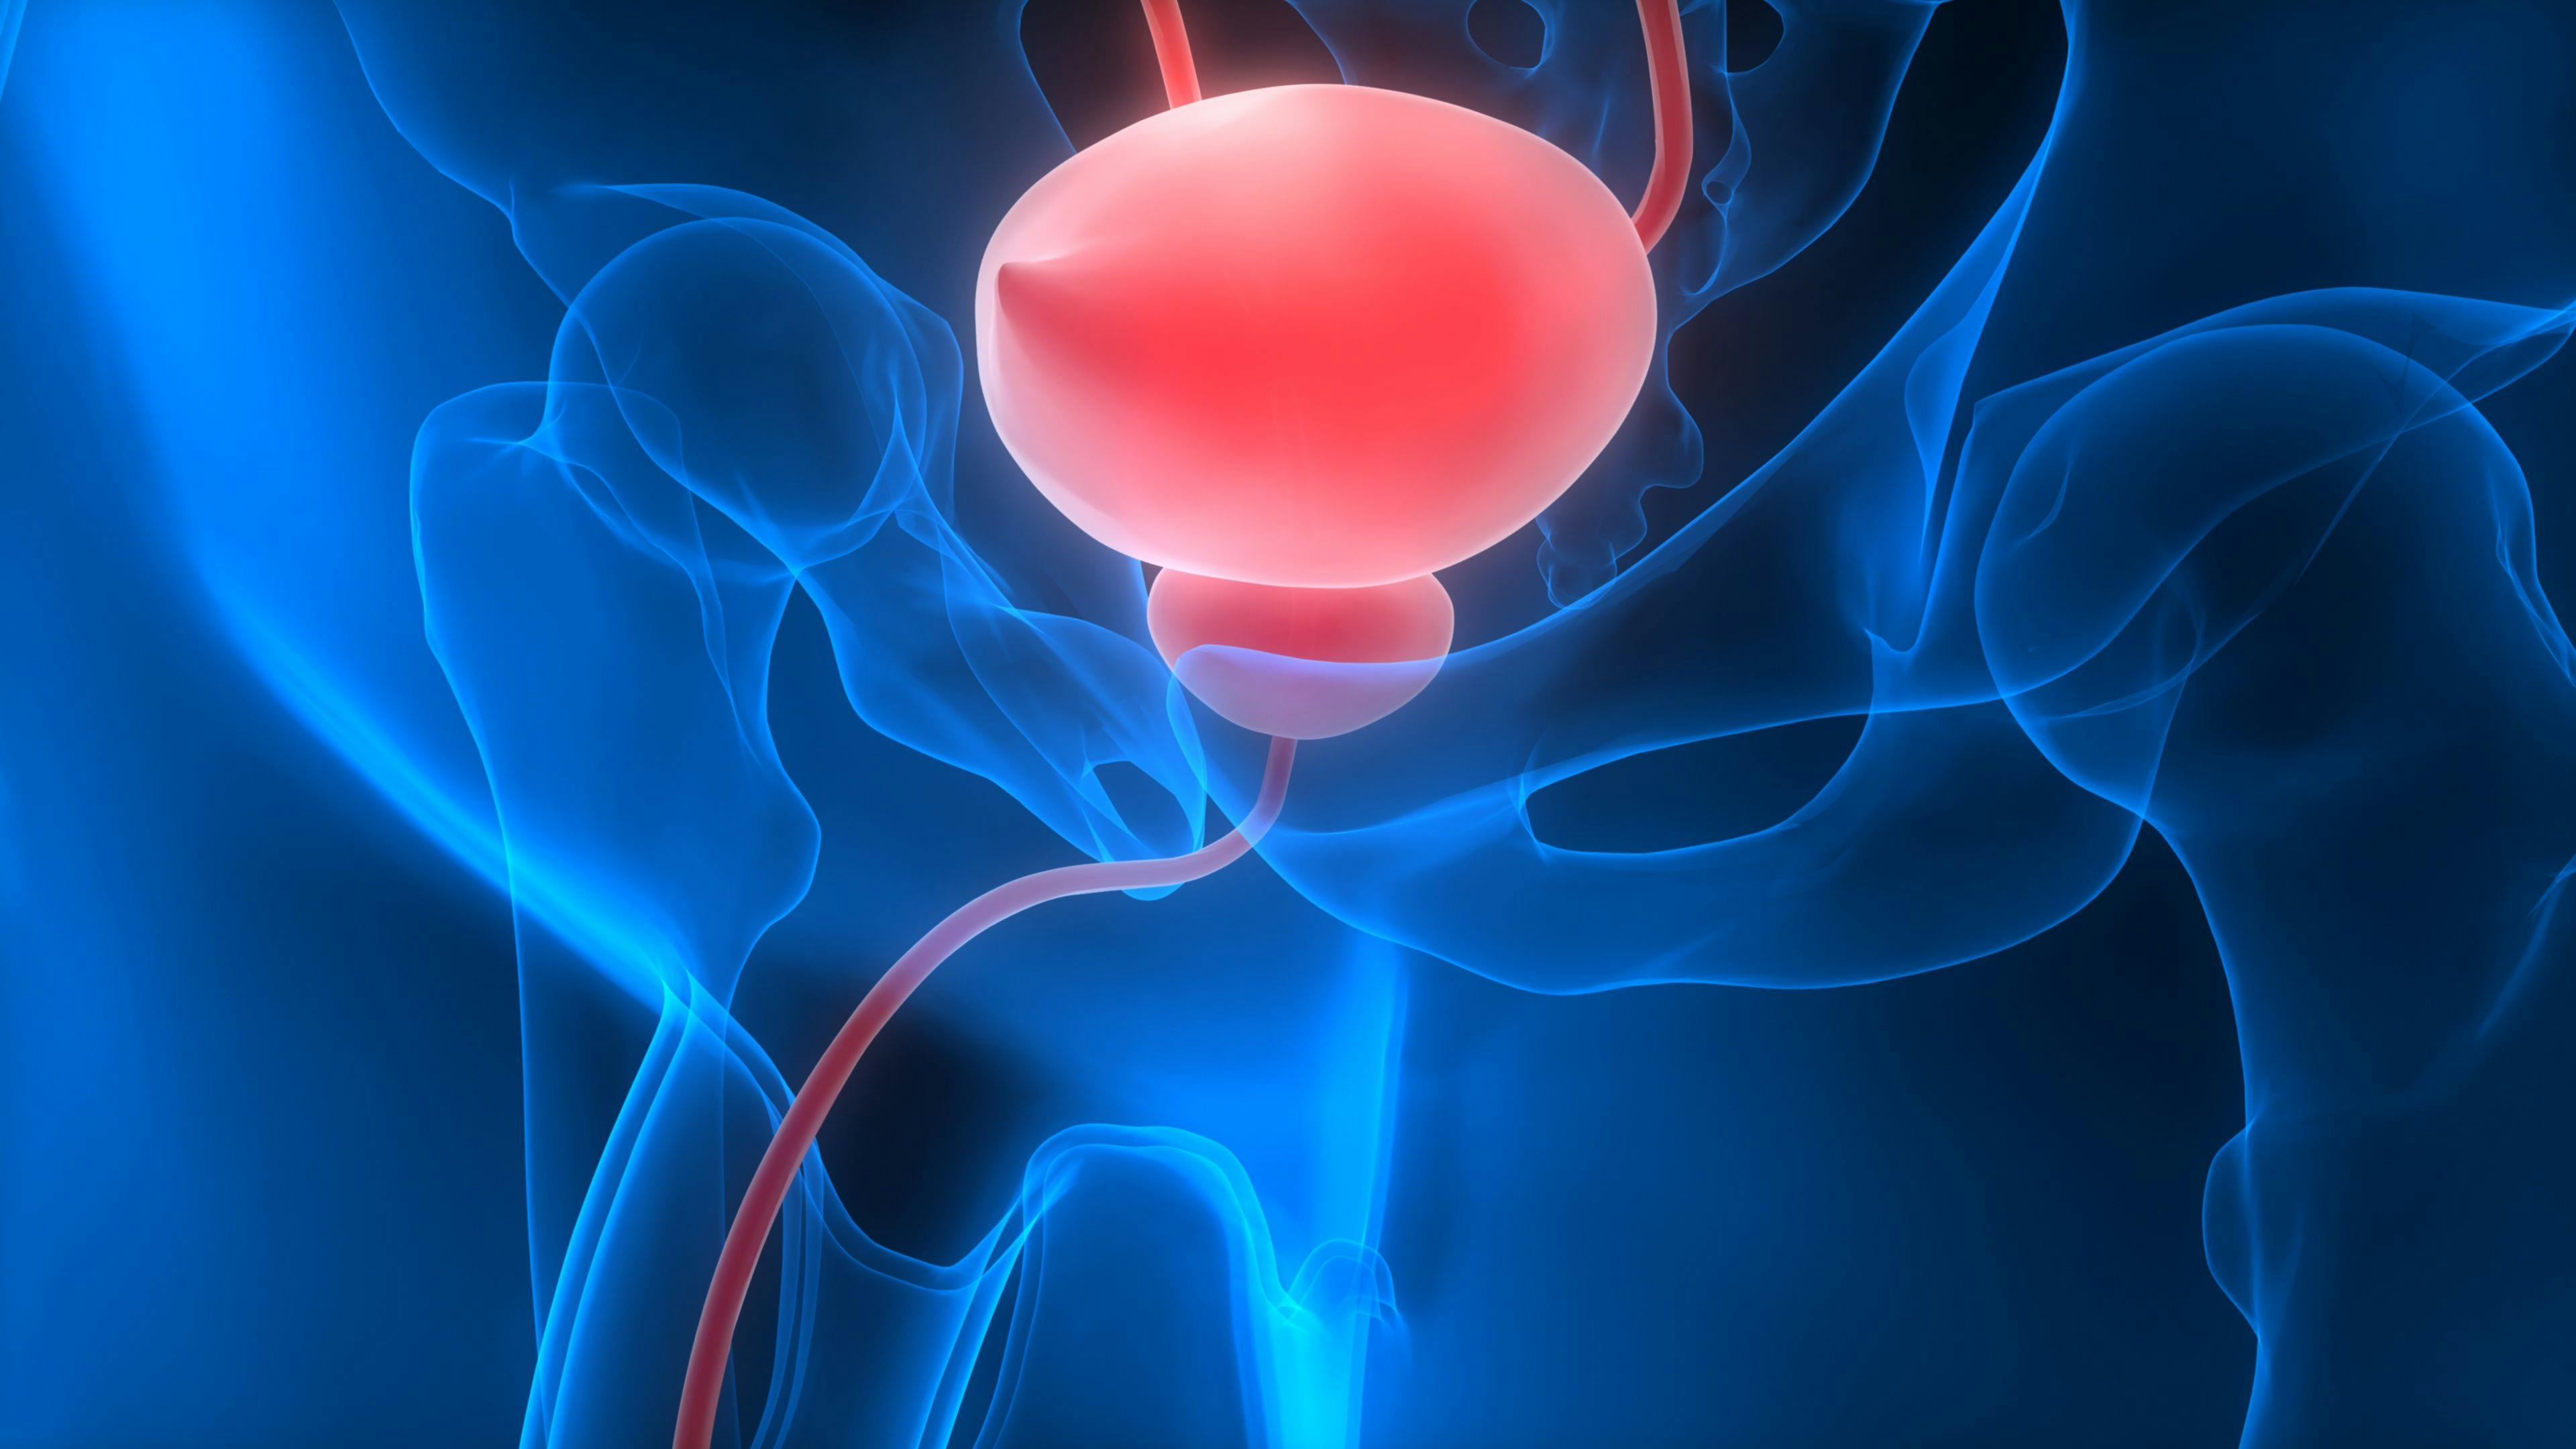 Illustration of a human bladder